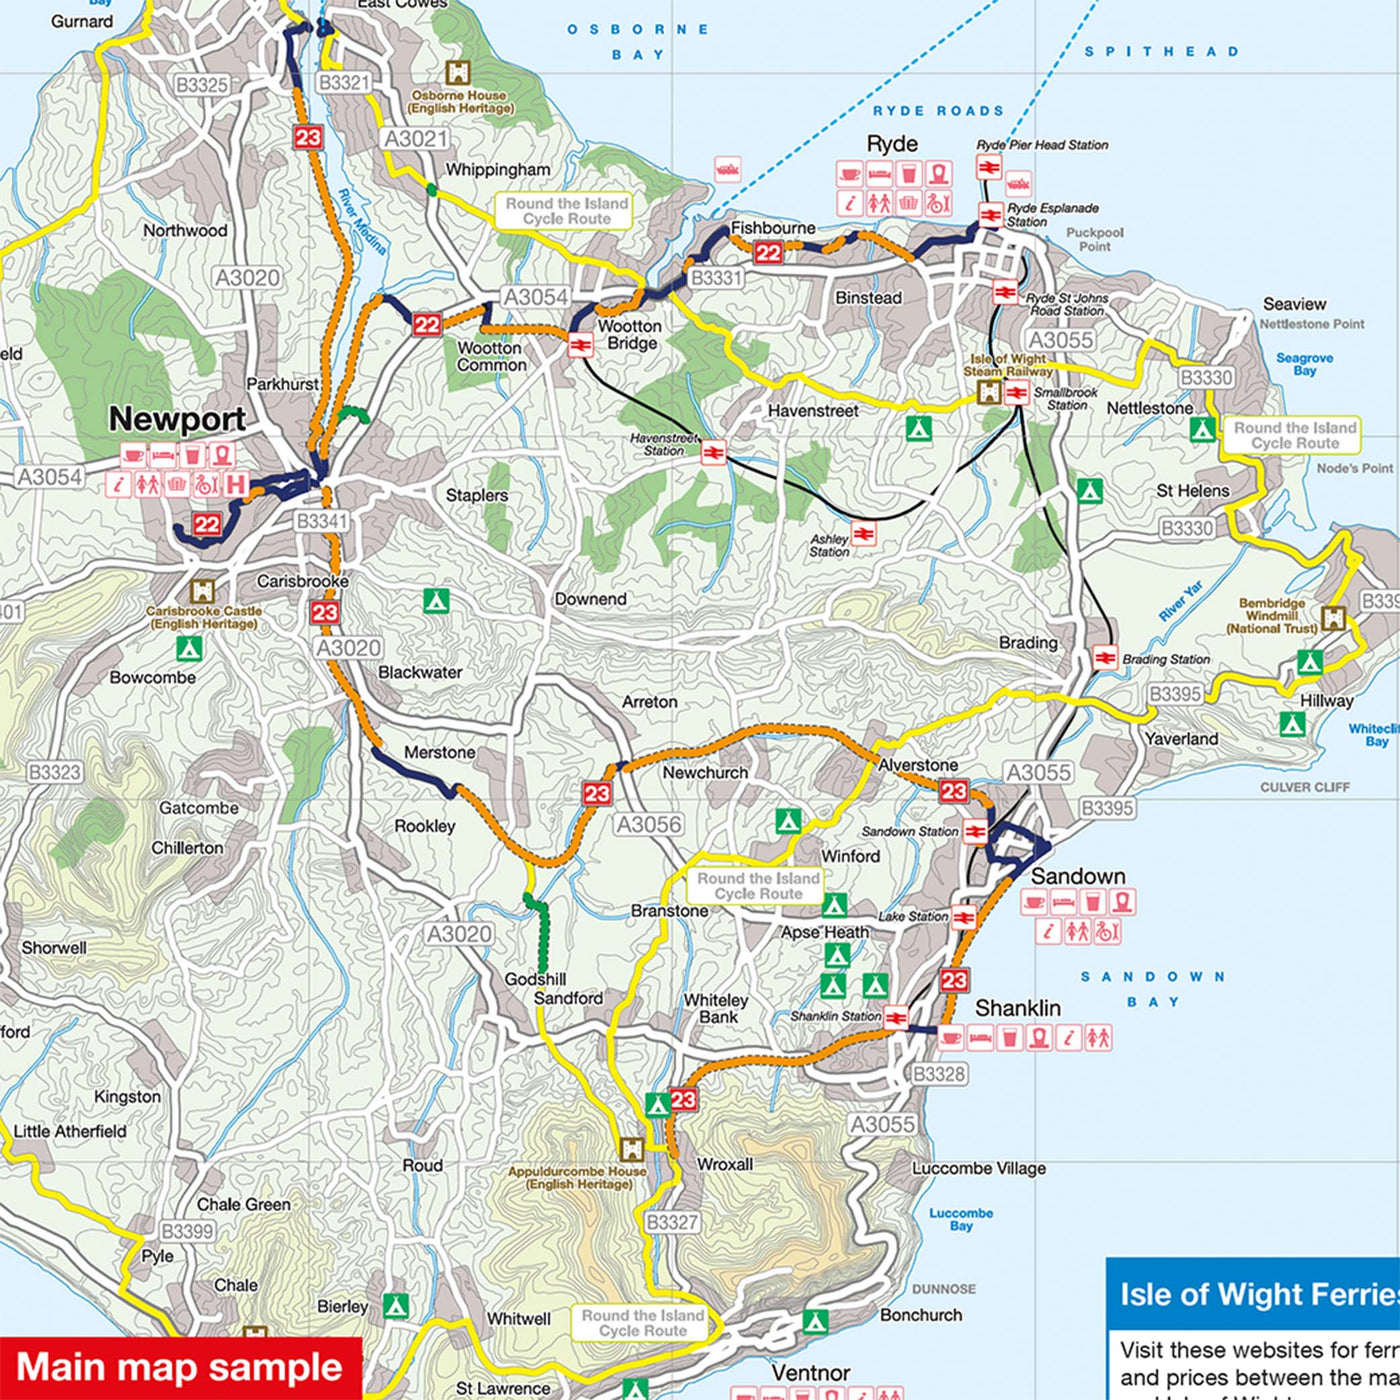 Main map sample of Isle of Wight - Newport 